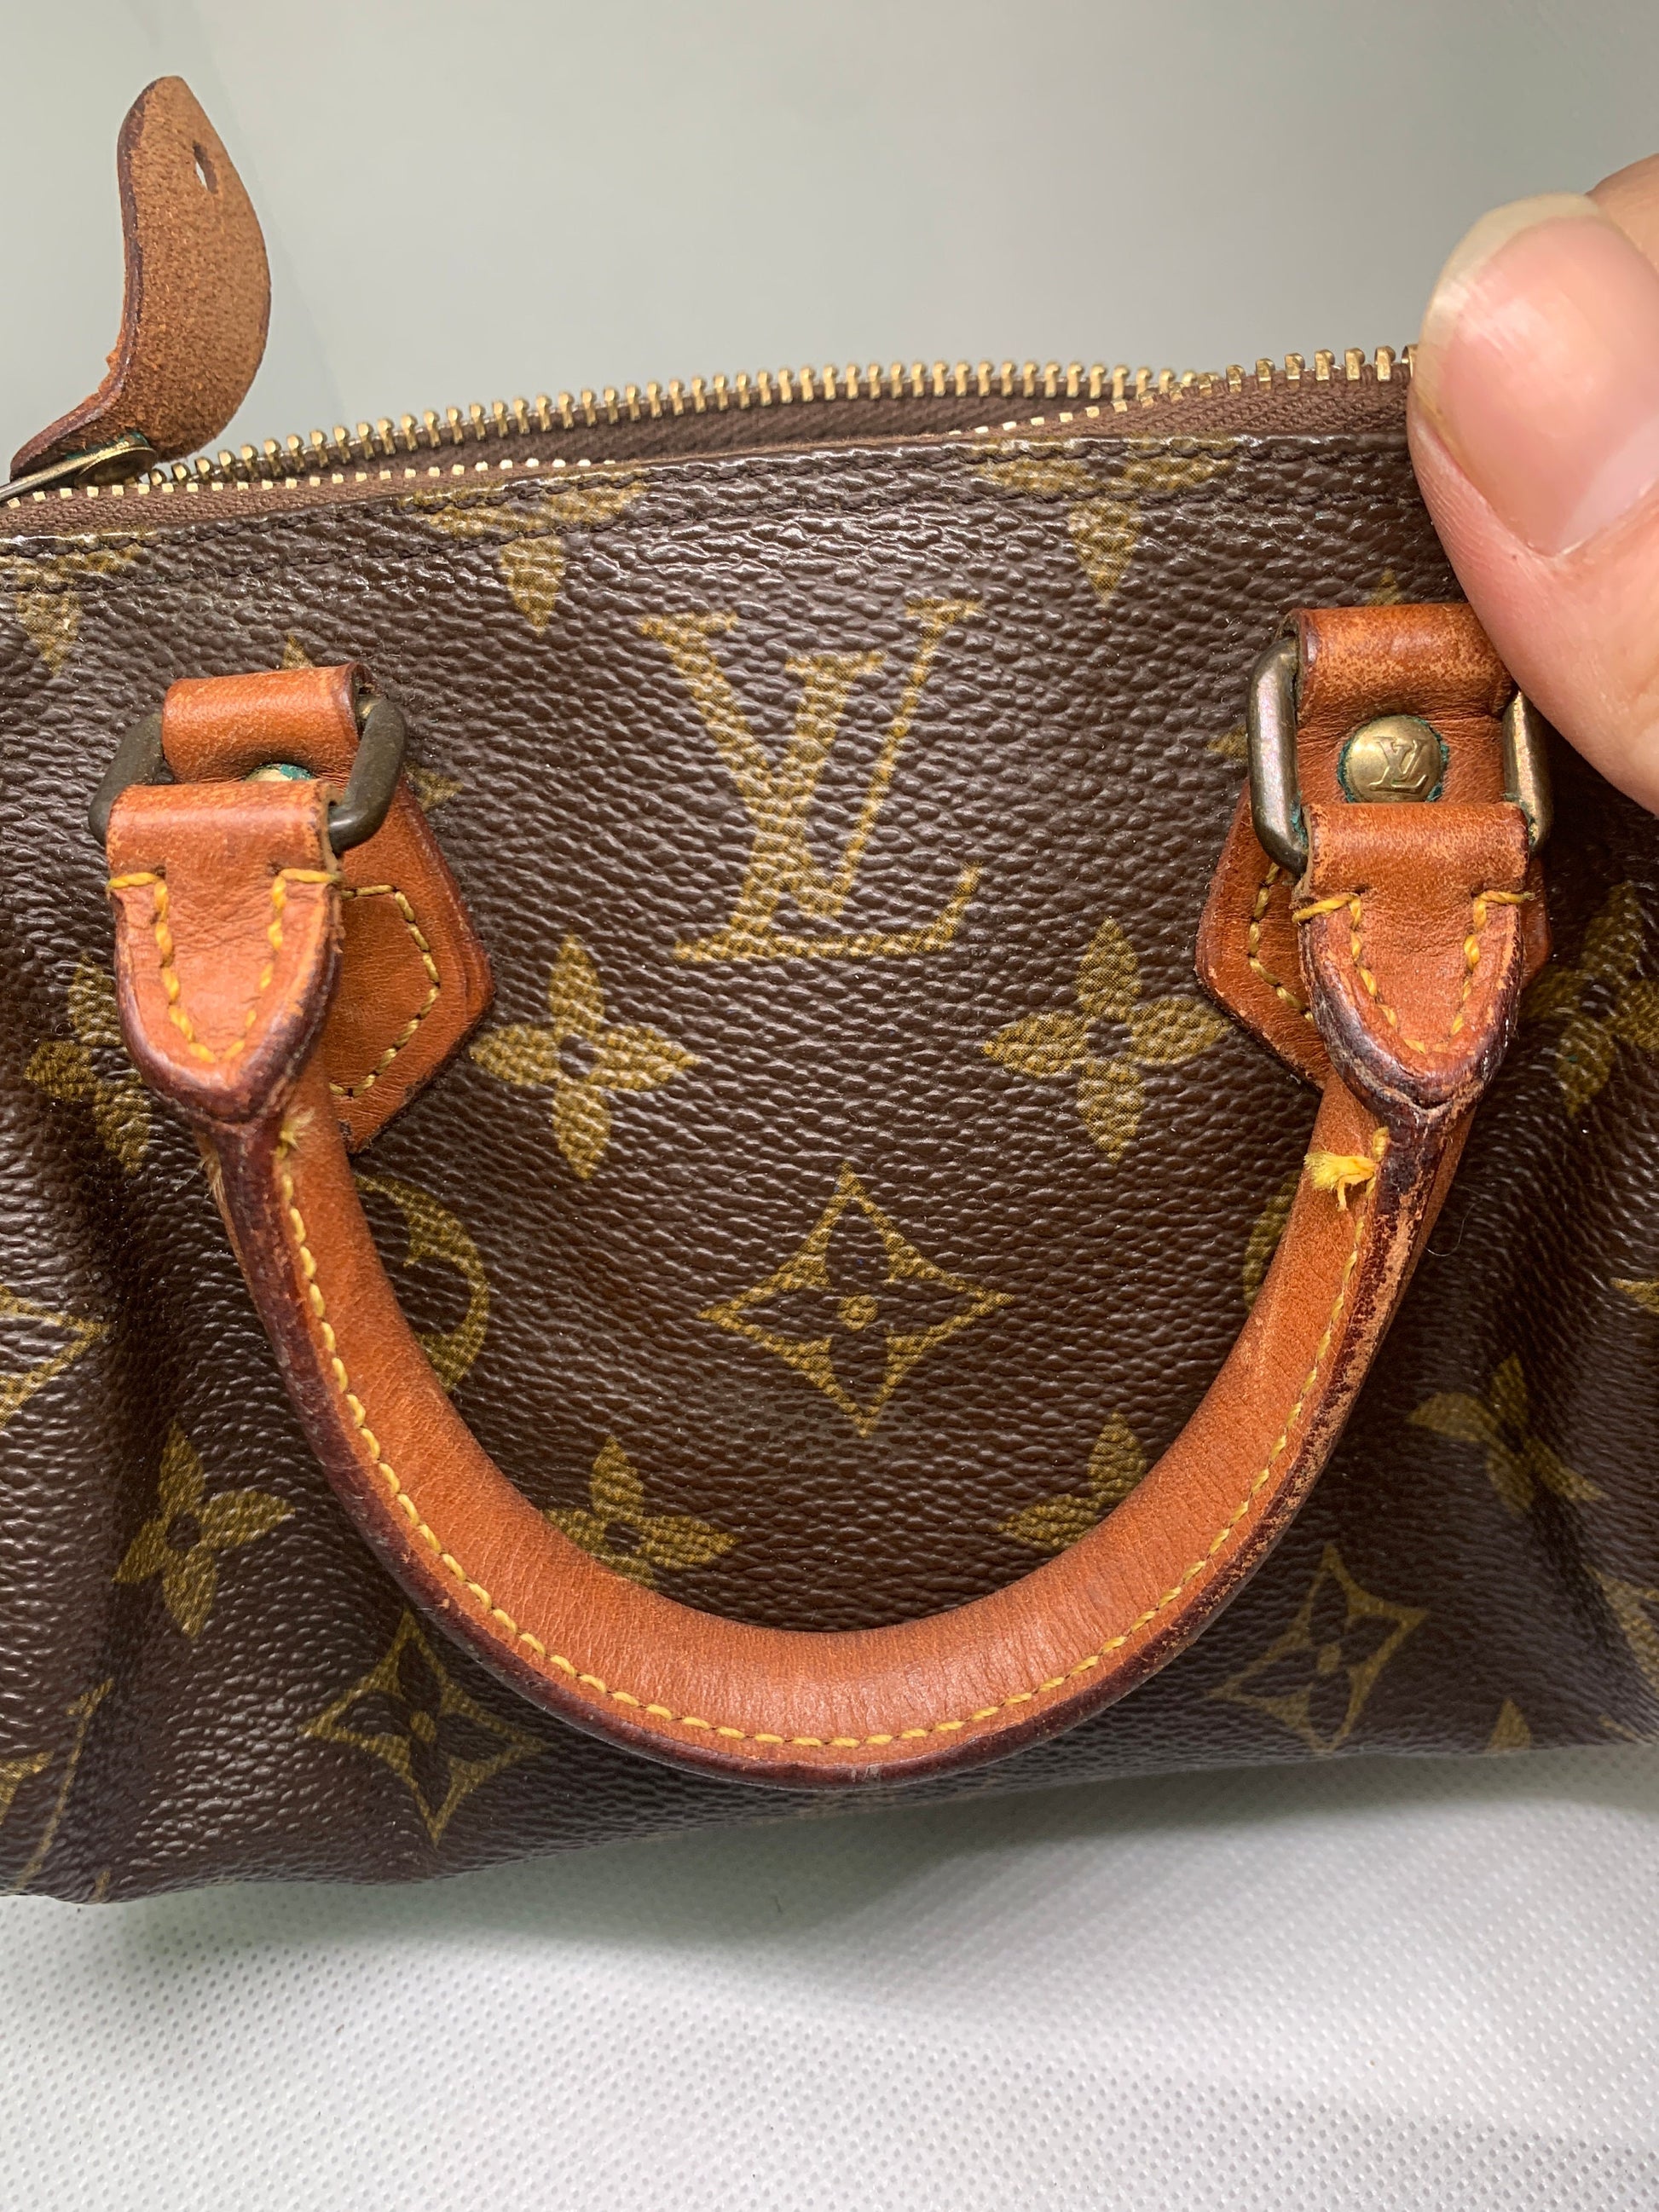 Rare Authentic Louis Vuitton mini monogram speedy handbag purse 2